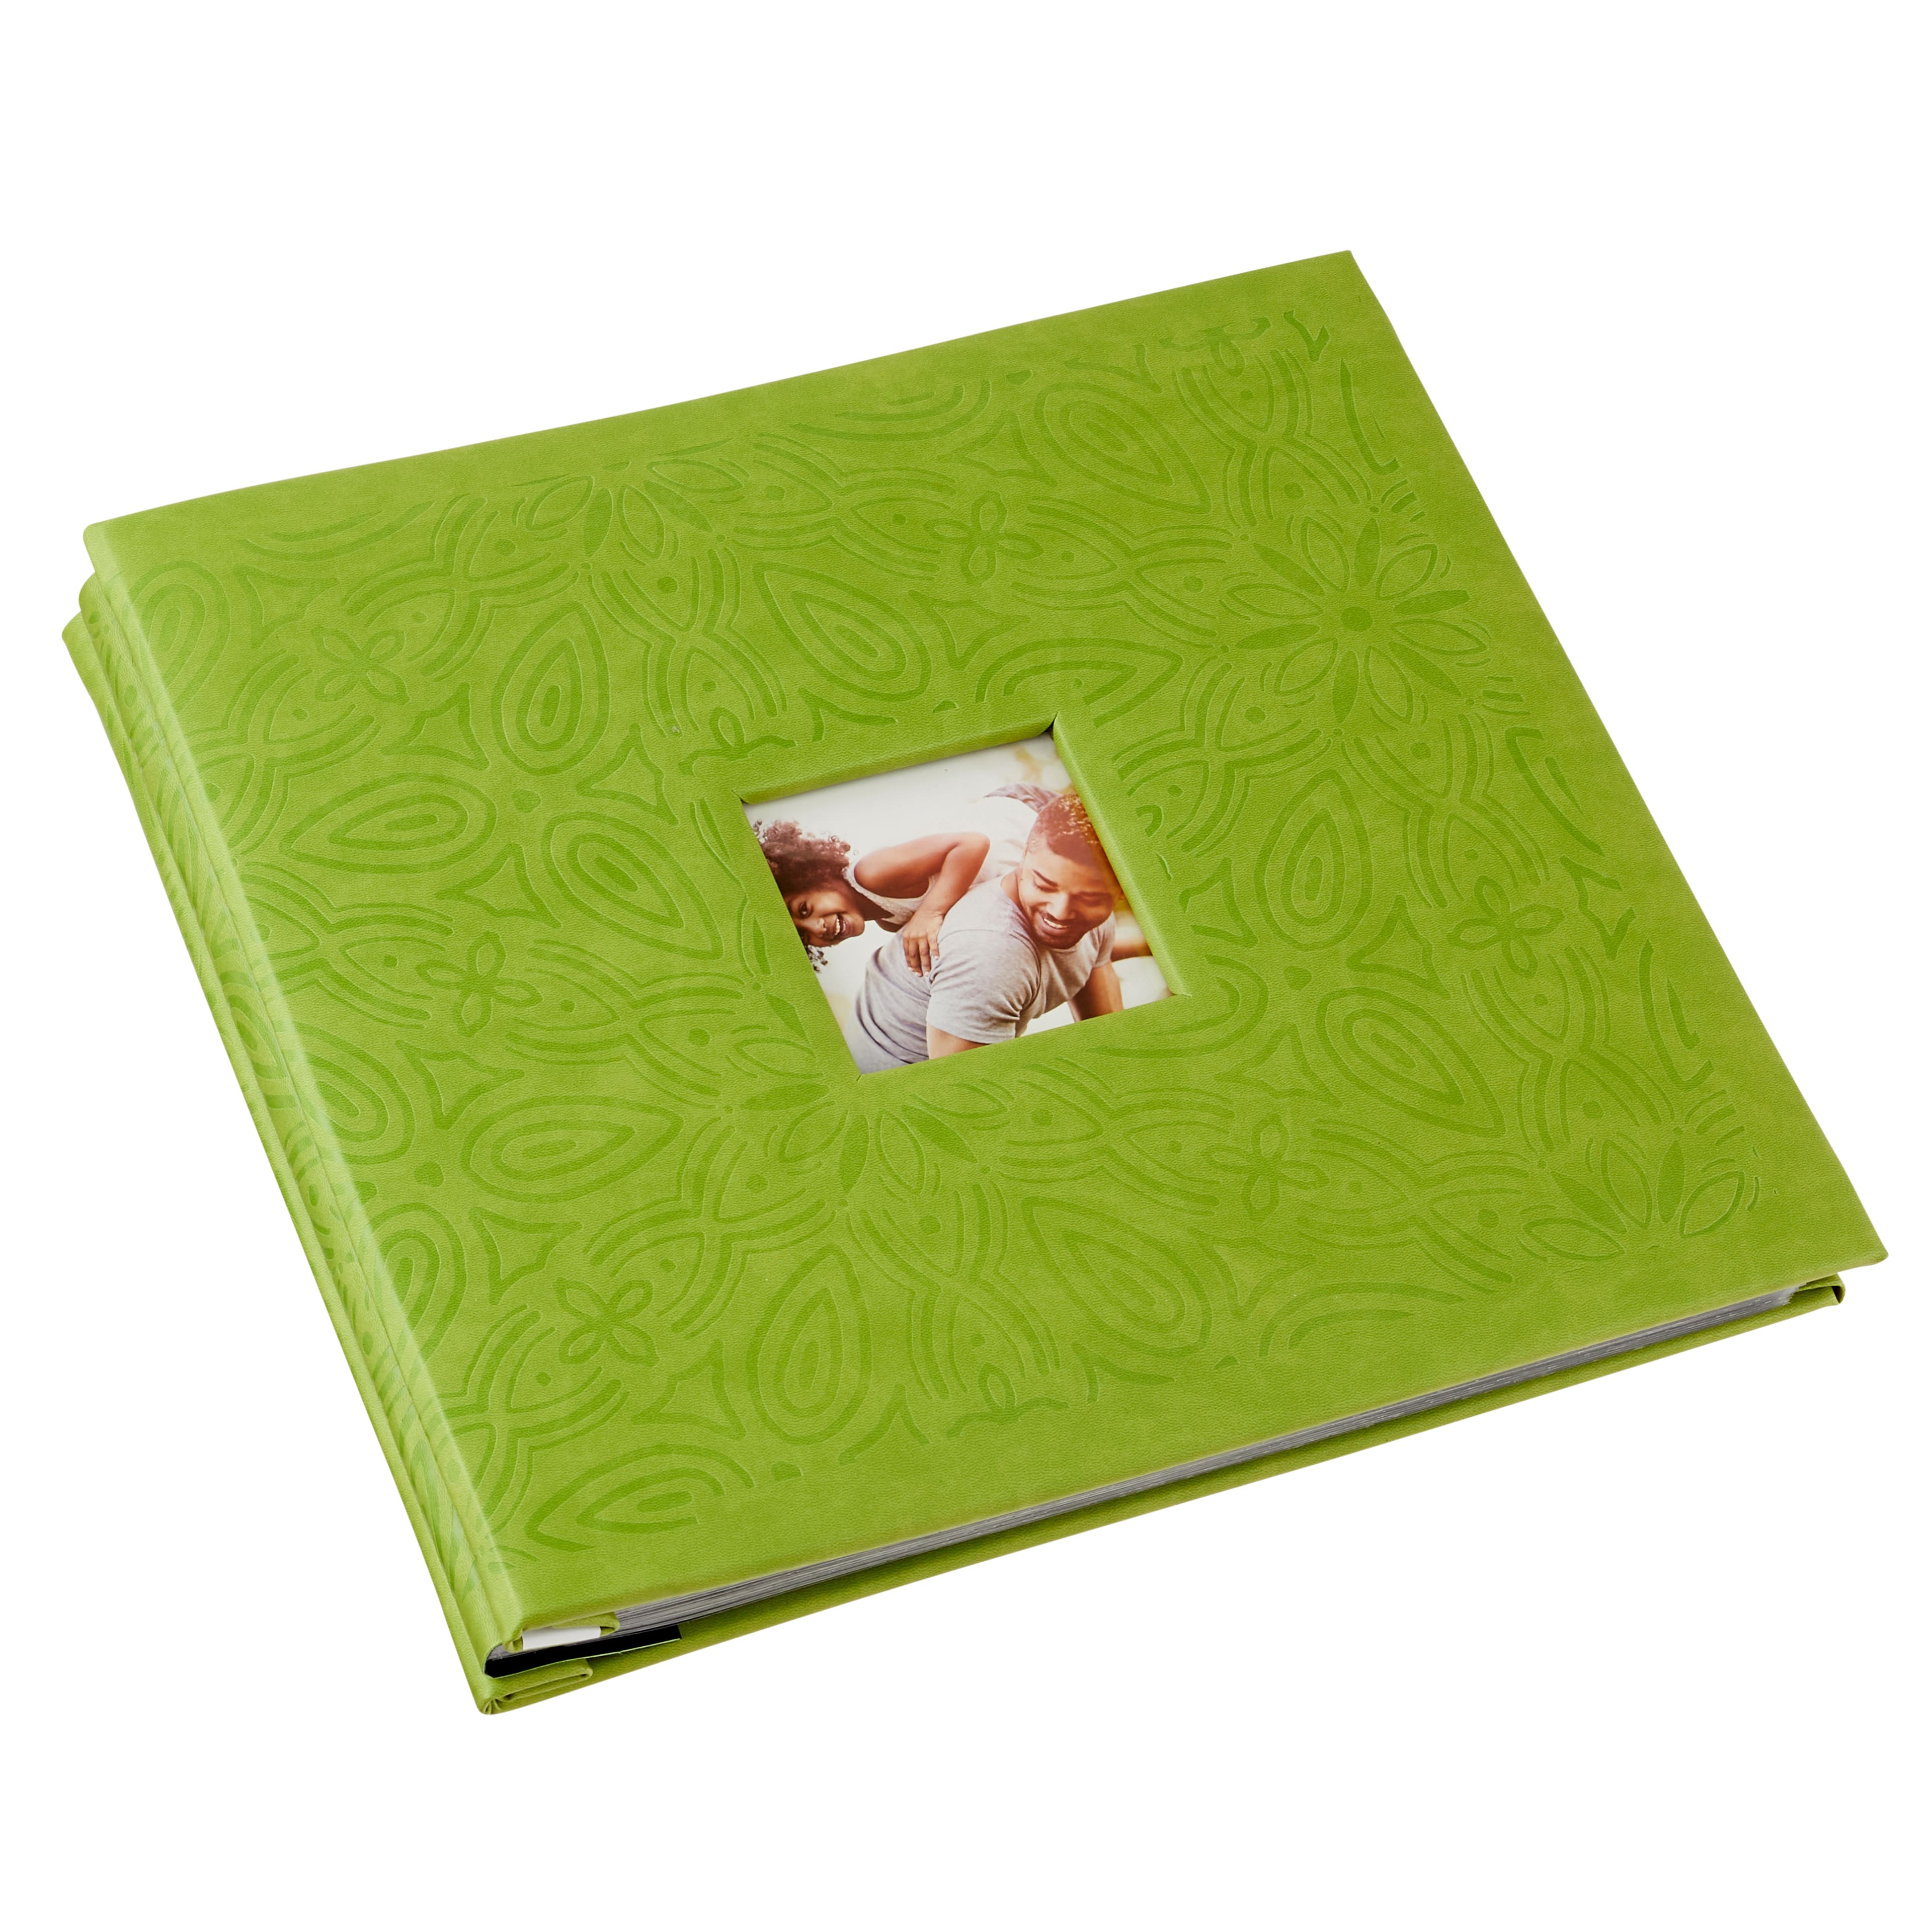 Green Mega Scrapbook Album by Recollections